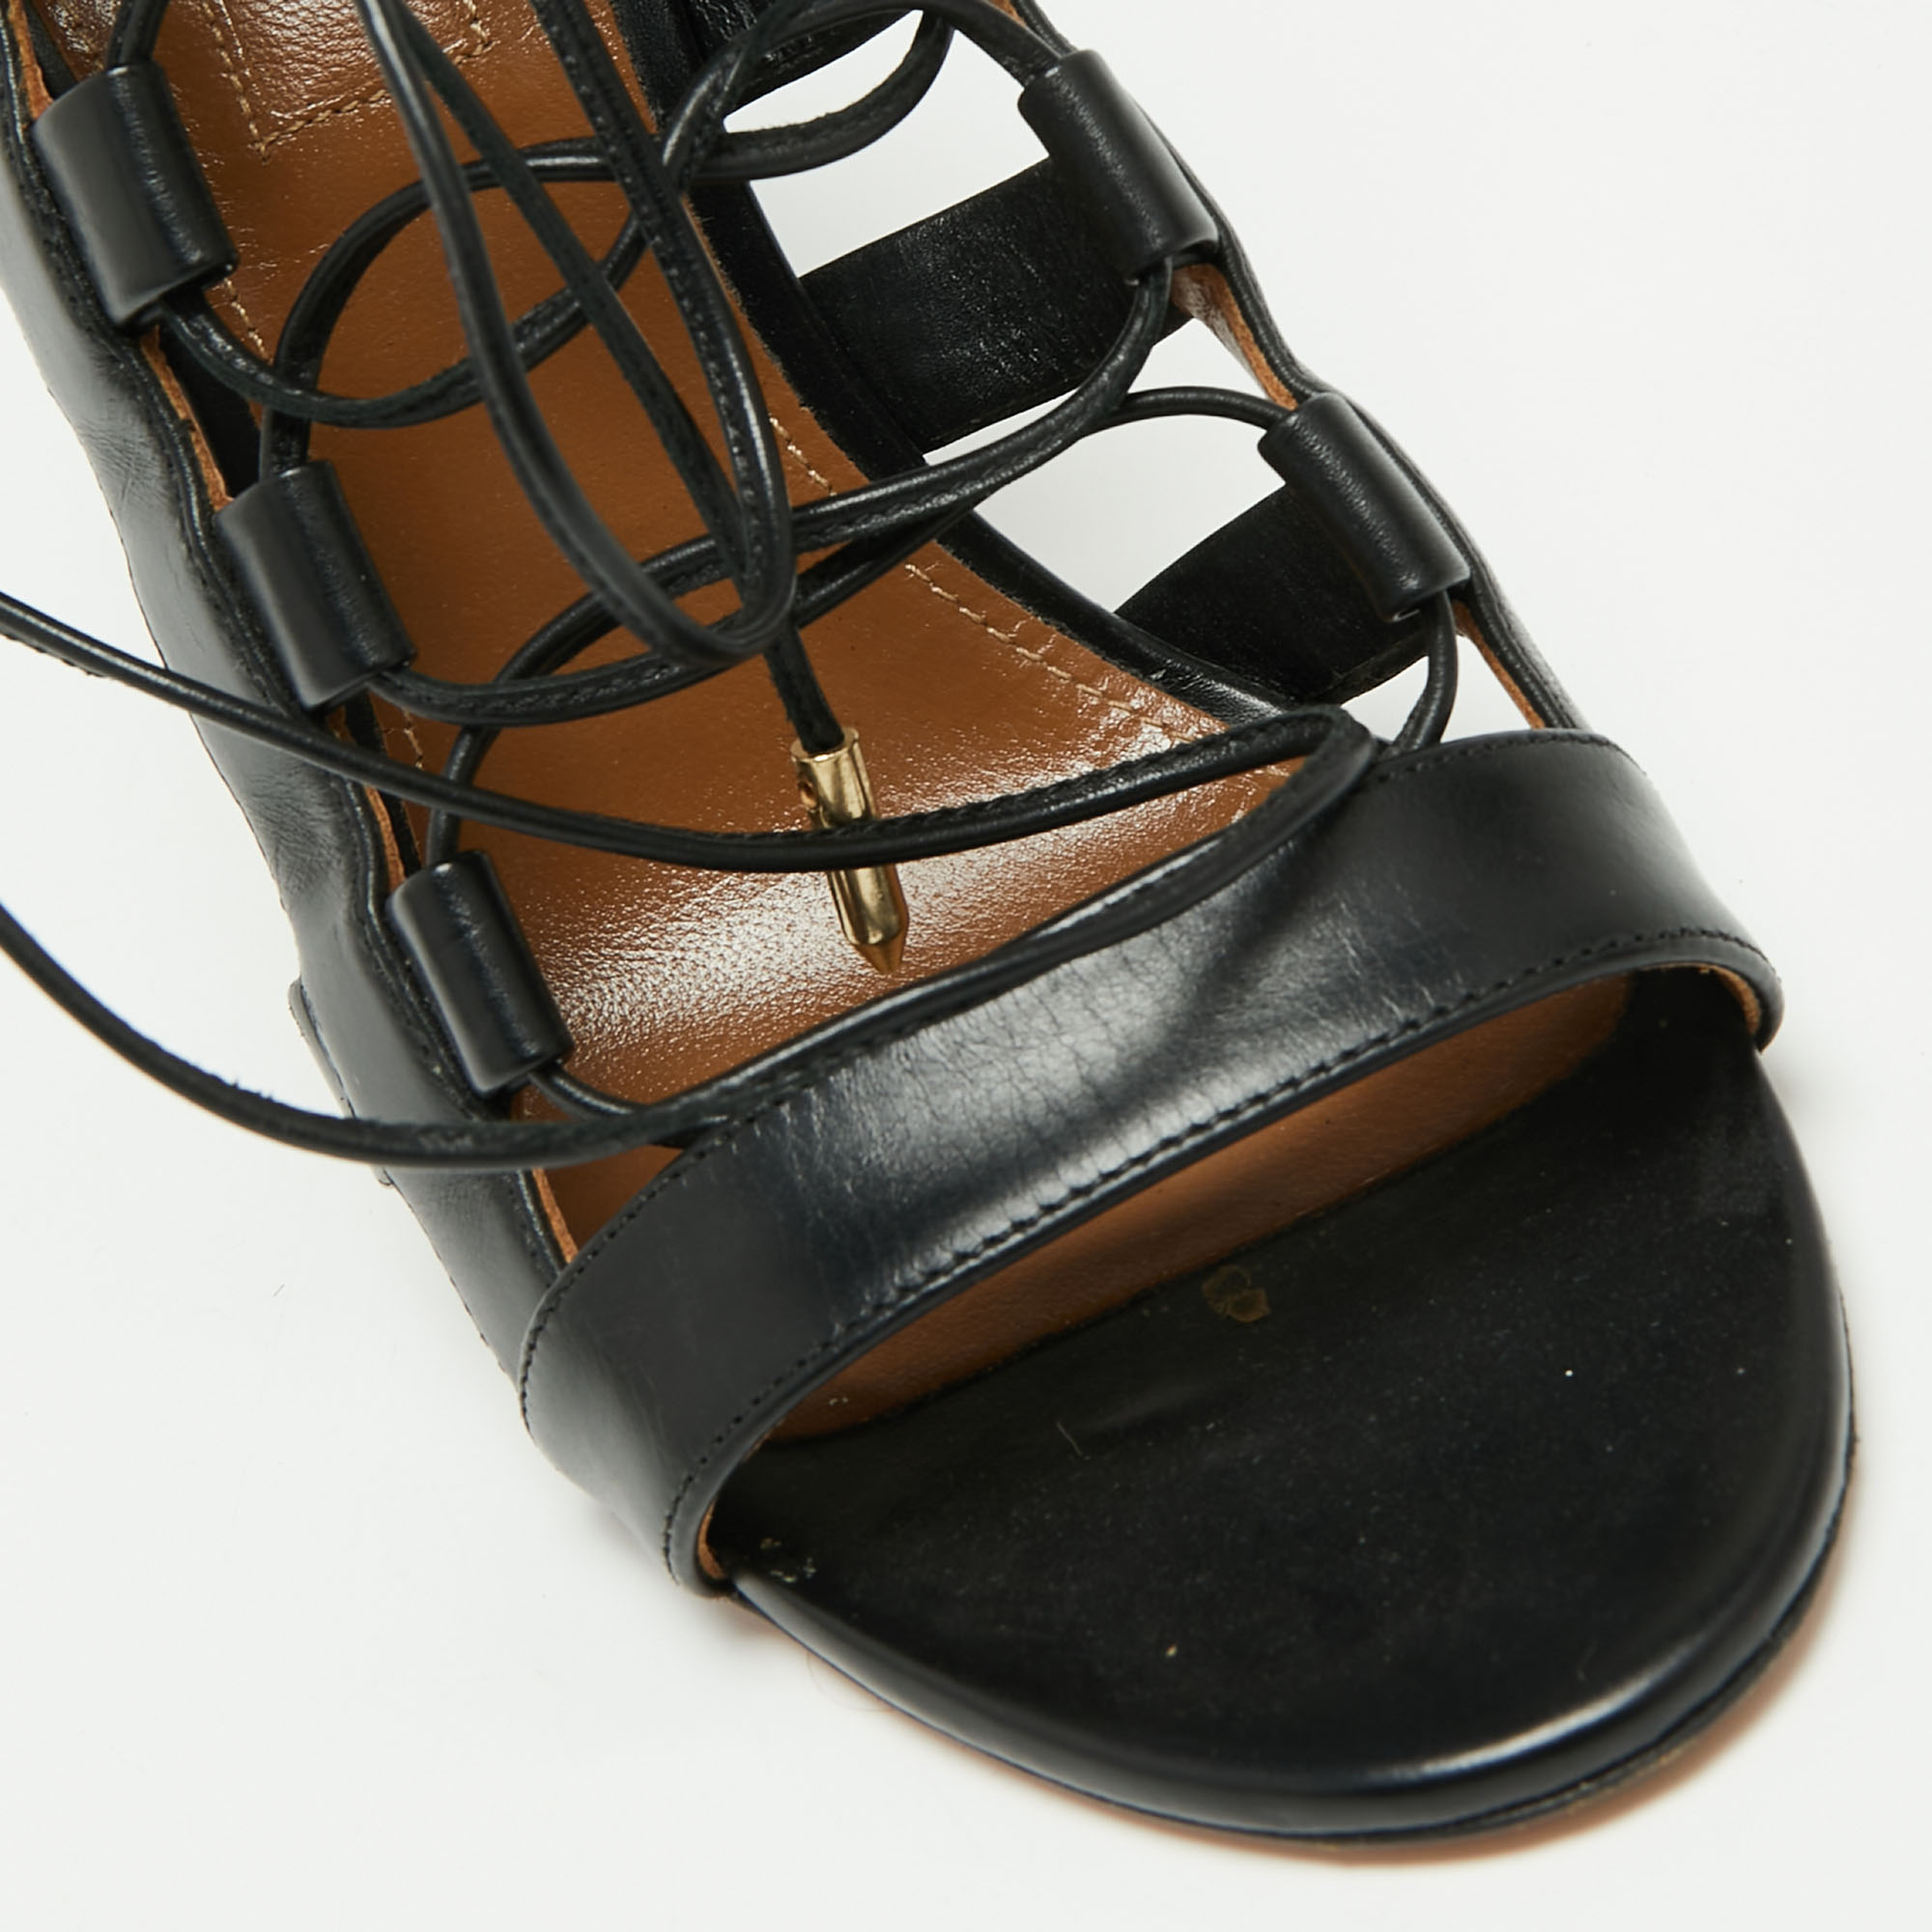 Aquazzura Black Leather Amazon Lace Up Open-Toe Sandals Size 37